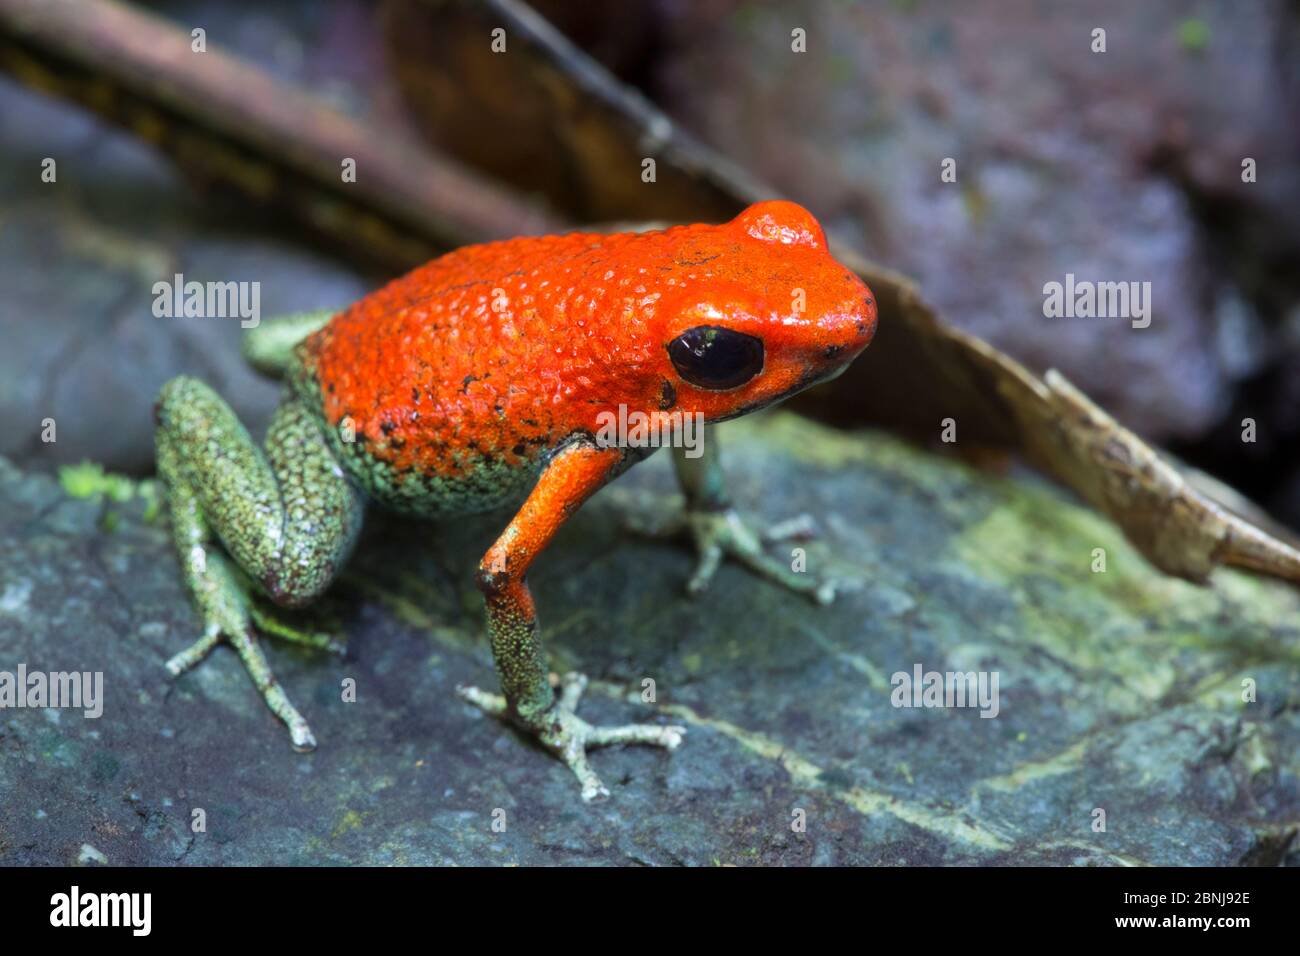 Granulare Pfeilgiftfrosch (Oophaga granulifera) Halbinsel Osa, Costa Rica. Gefährdete Rote Liste Arten. Stockfoto